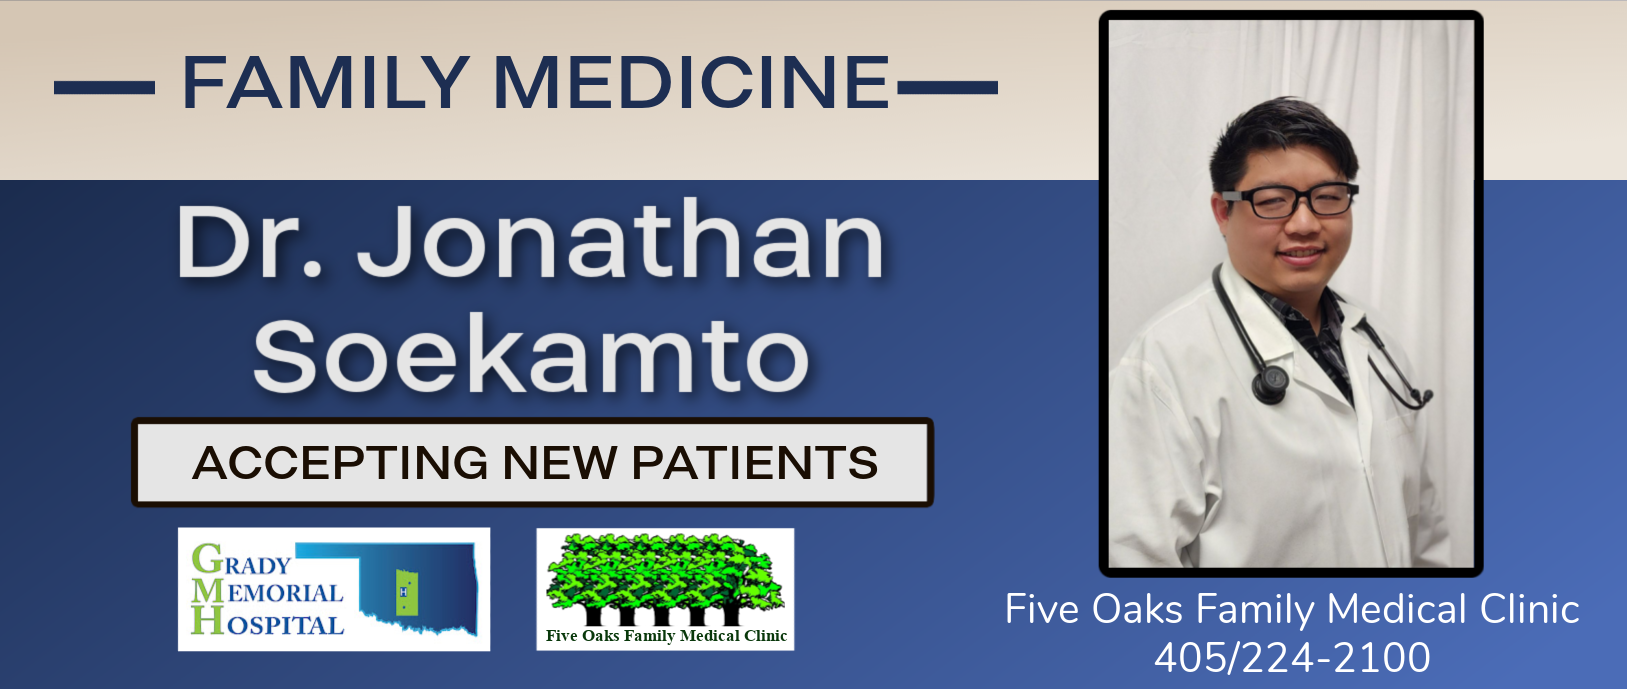 Dr. Soekamto- New Family Medicine Physician